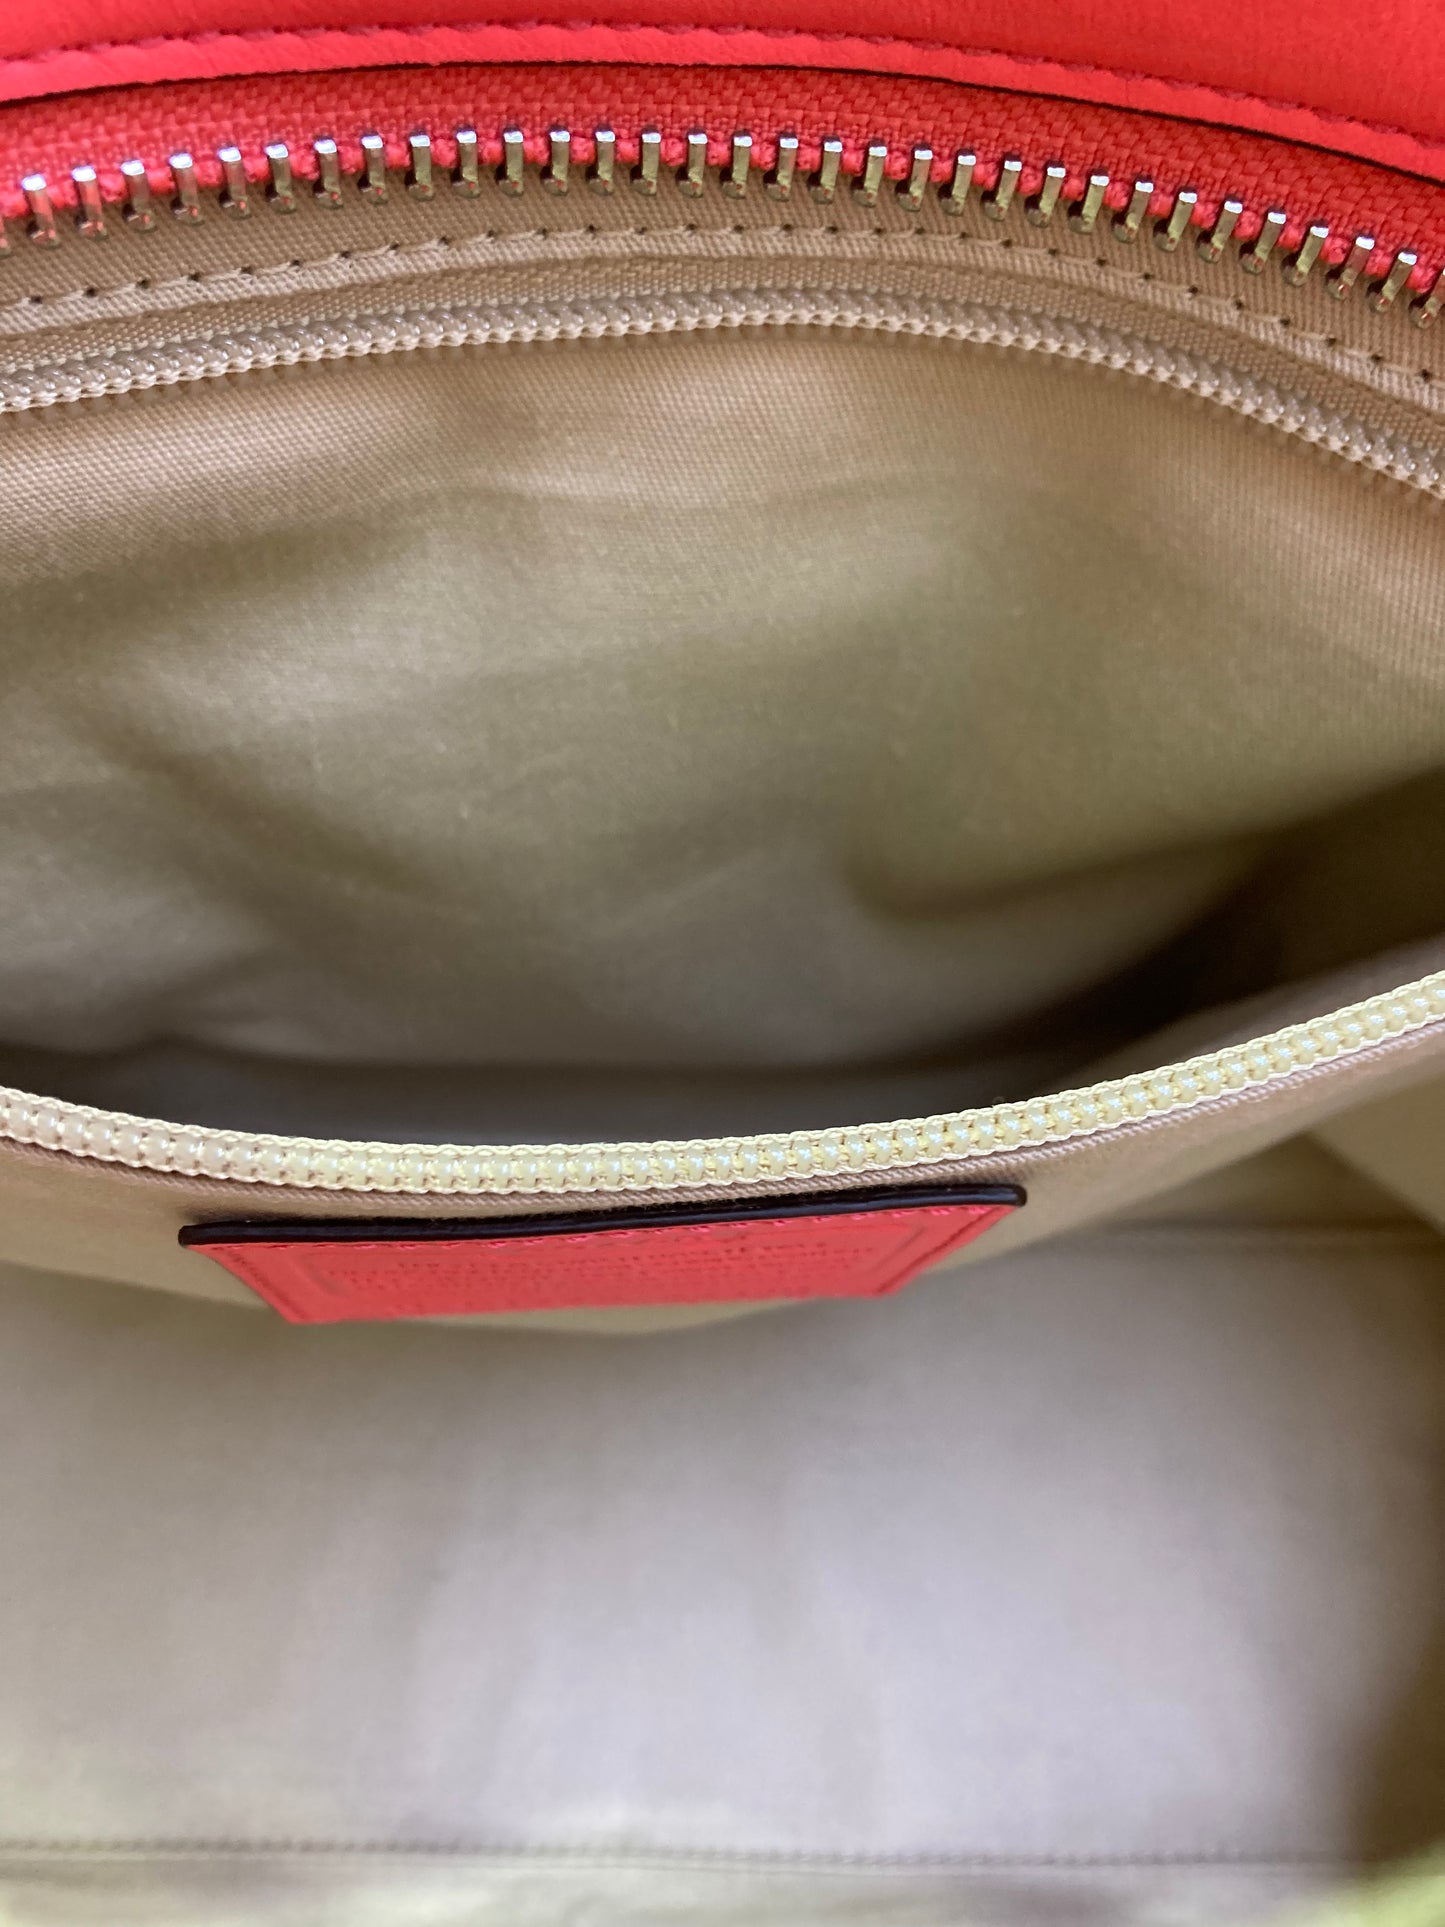 Coach Designer Handbag leather salmon color.